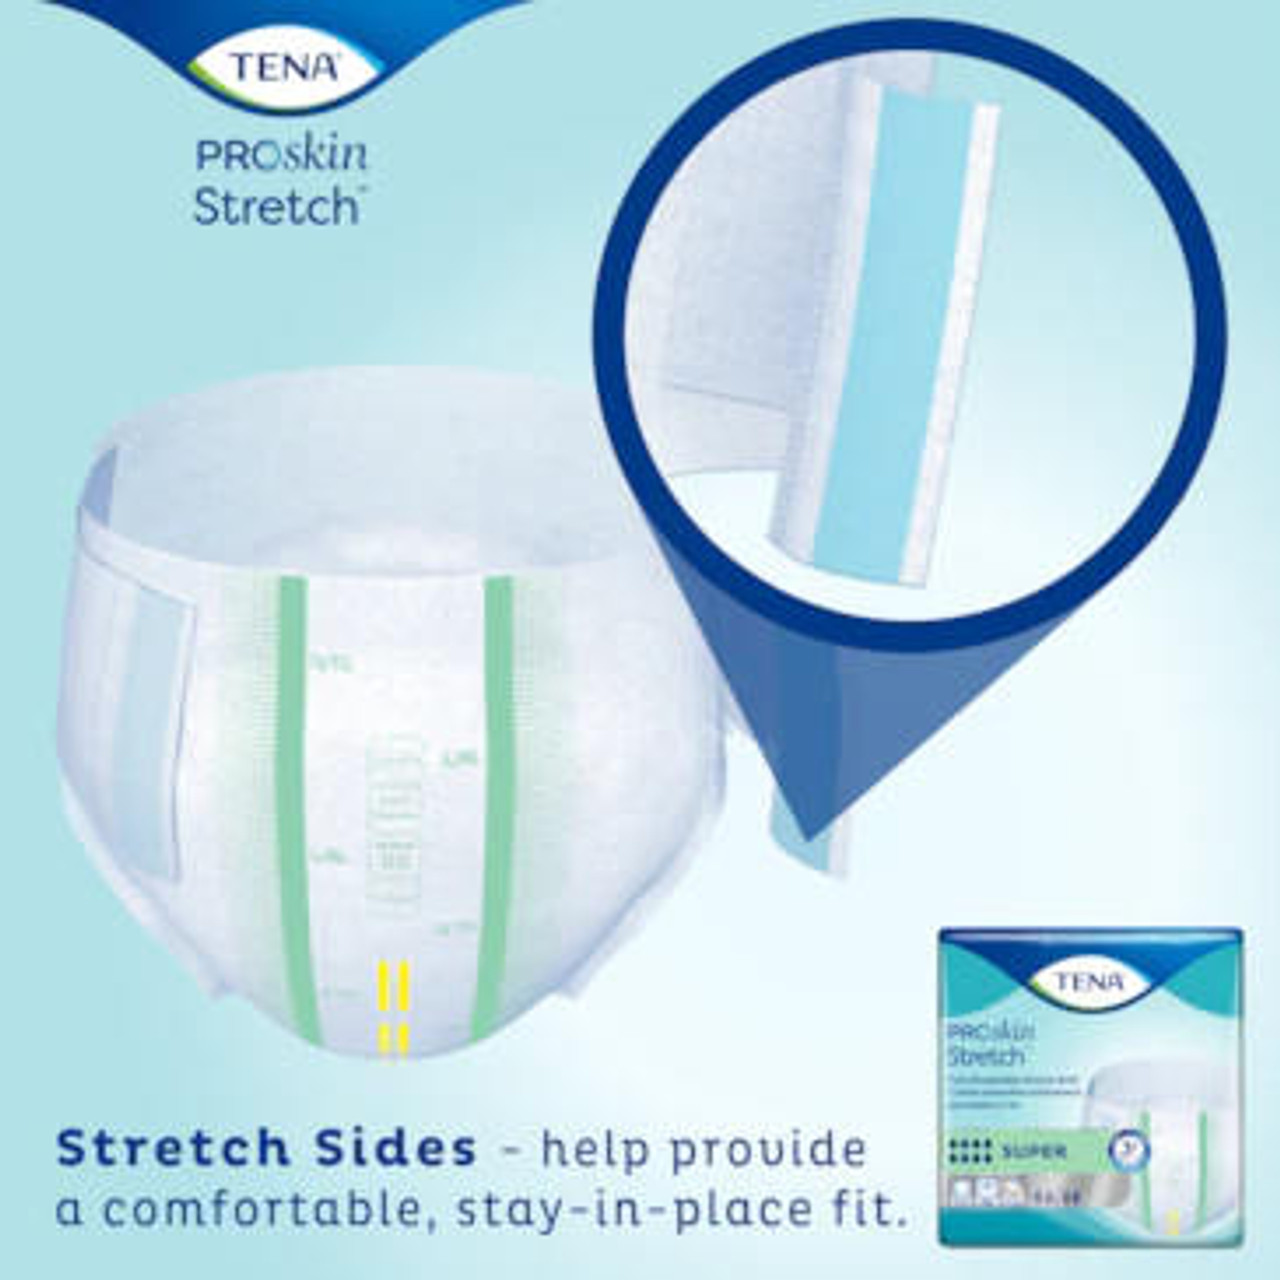 TENA® ProSkin Stretch™ Super Brief - All Med Express